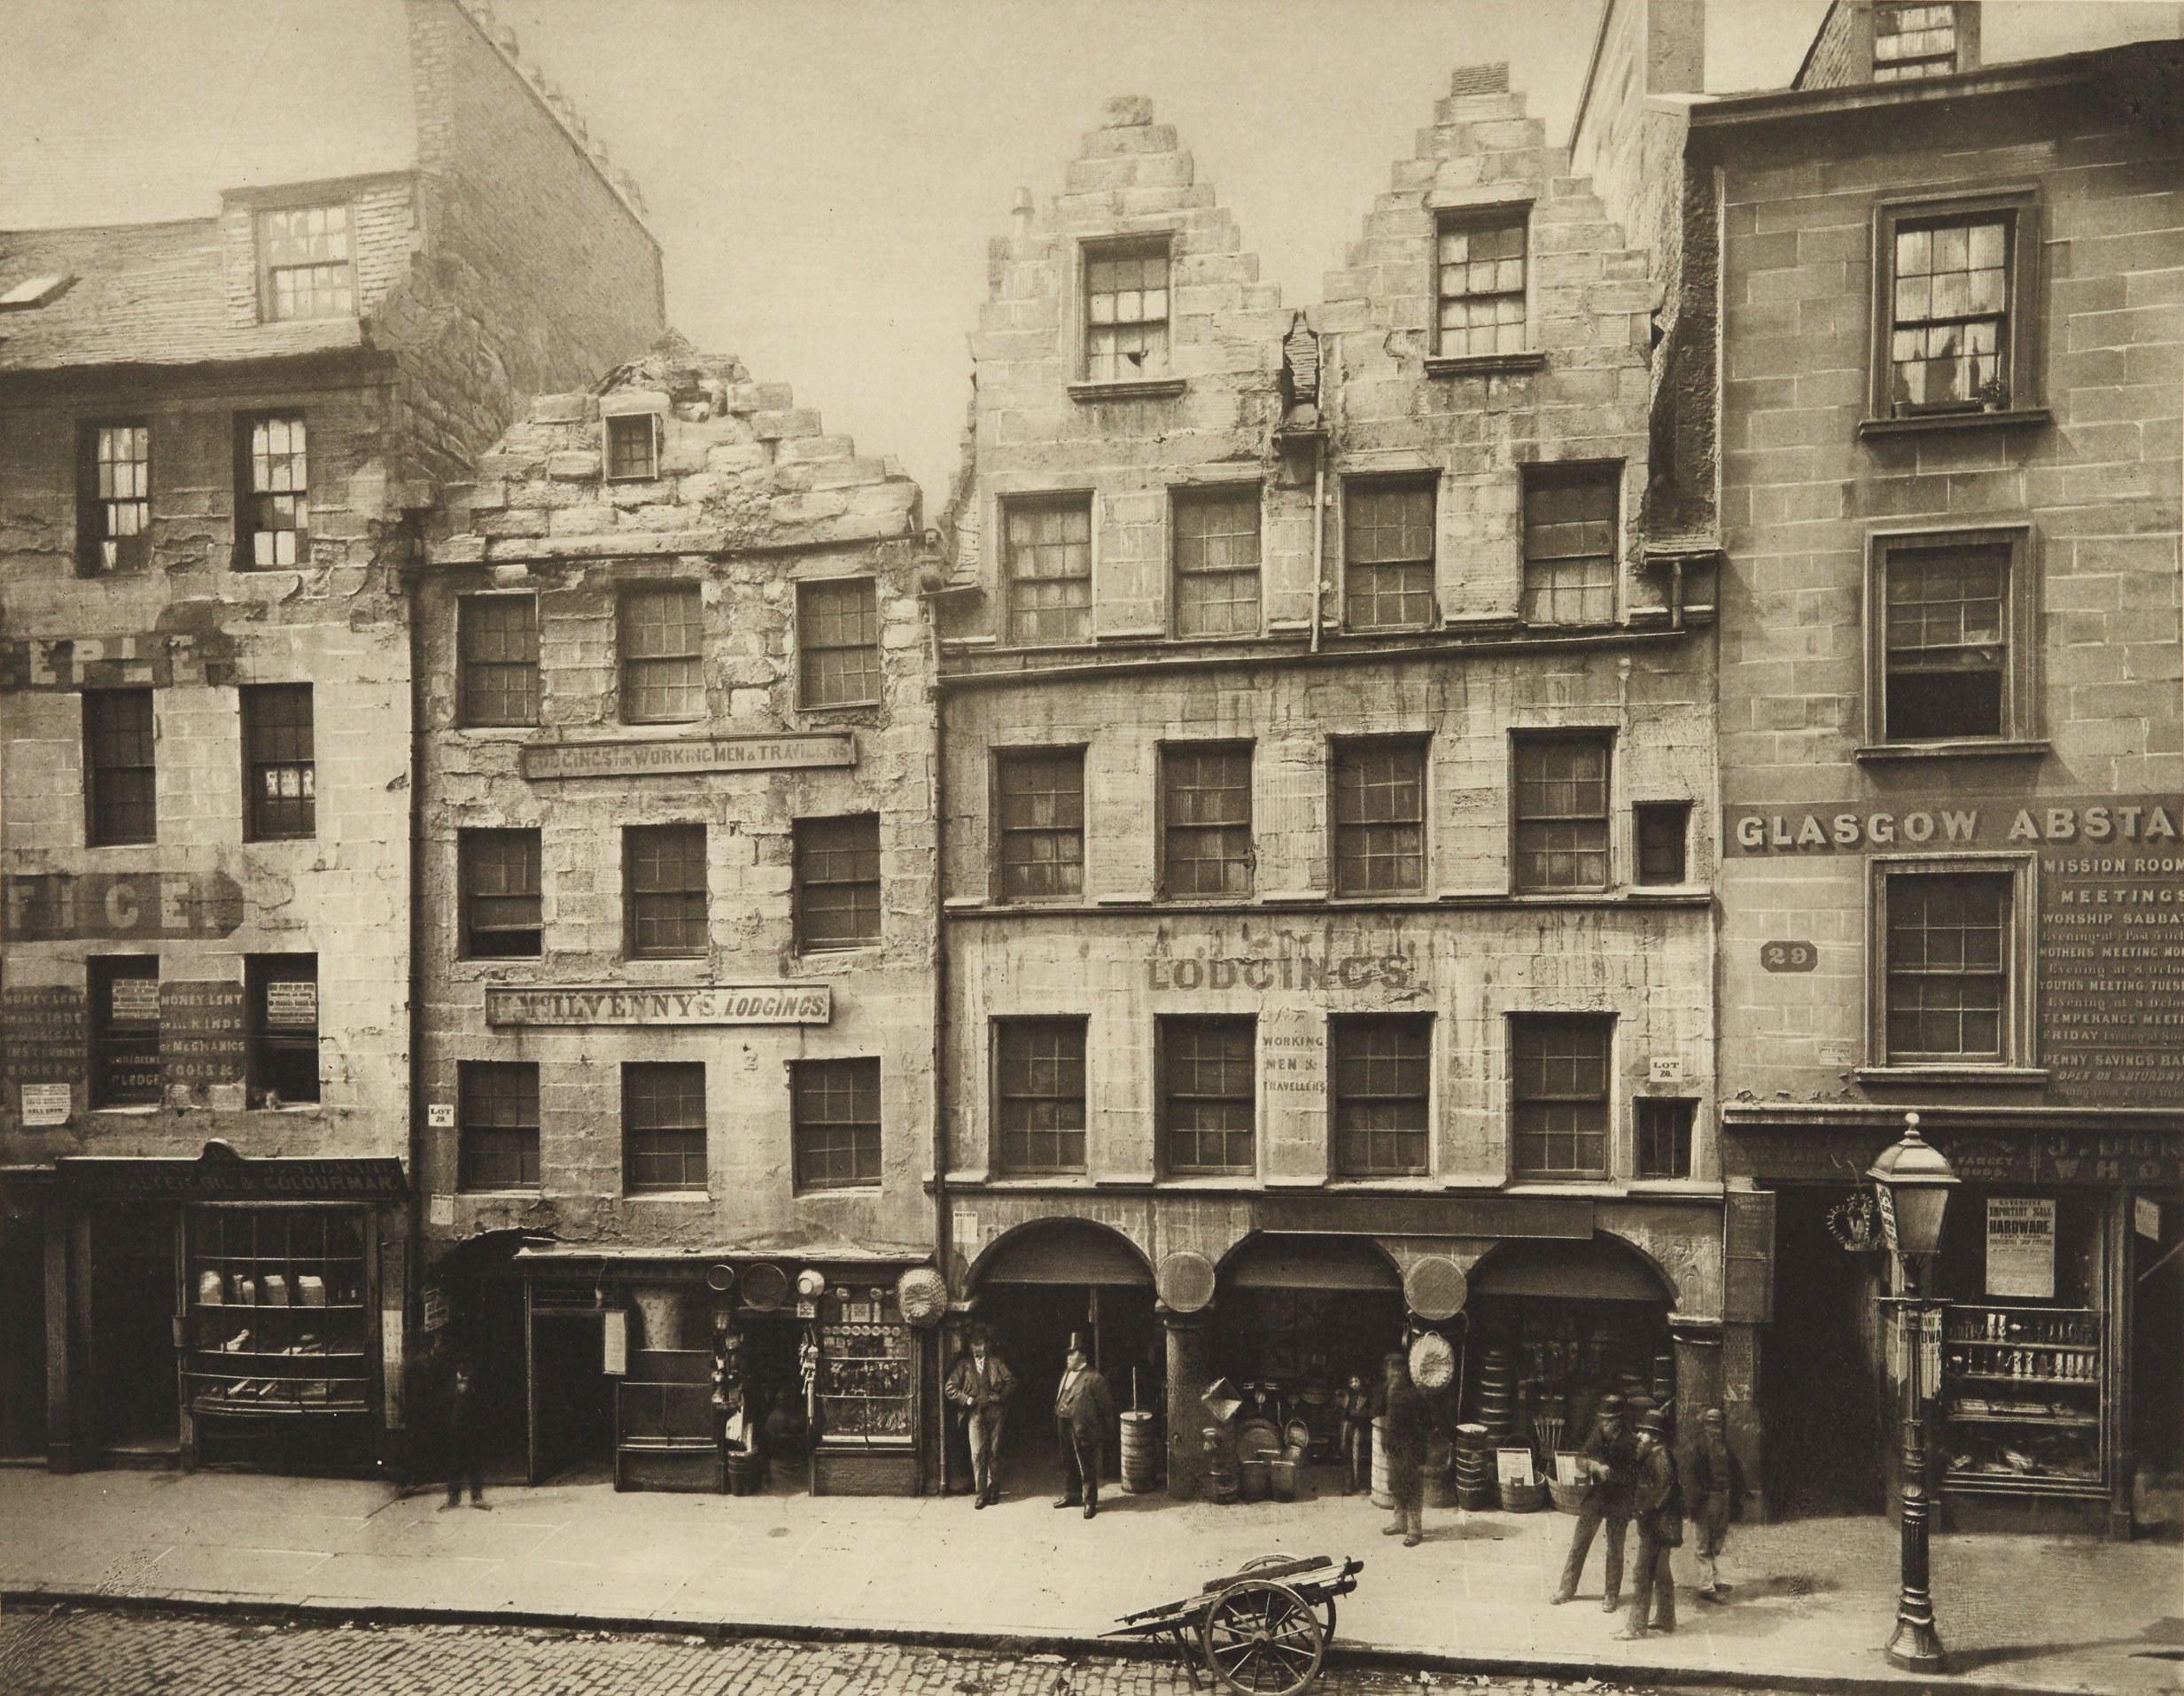 Old Buildings in High Street nos 17-27 1868 - Thomas Annan's Glasgow